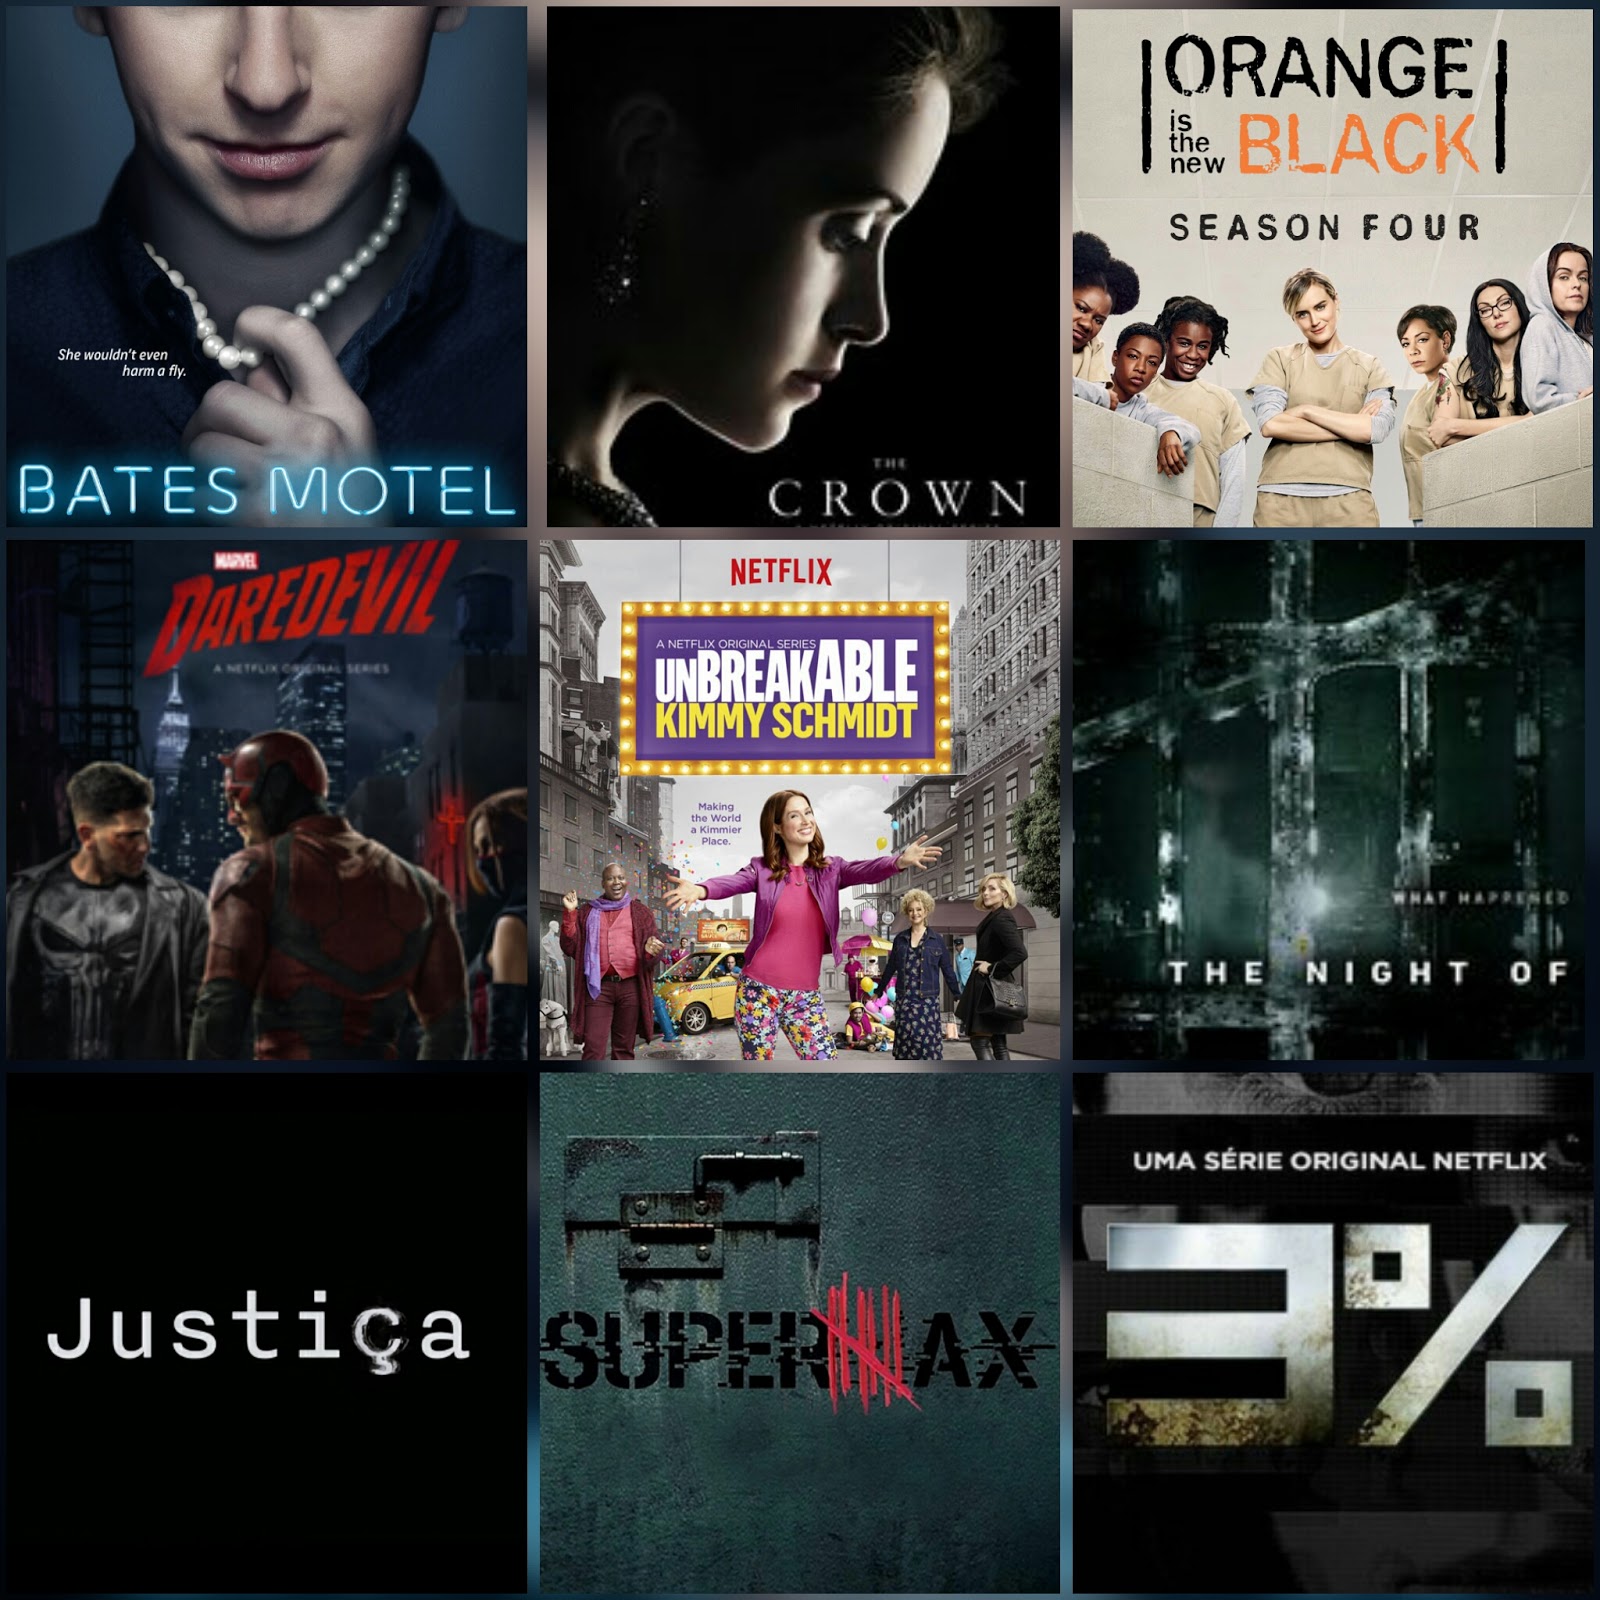 Sweet Home: terror coreano da Netflix é tenso e muito divertido